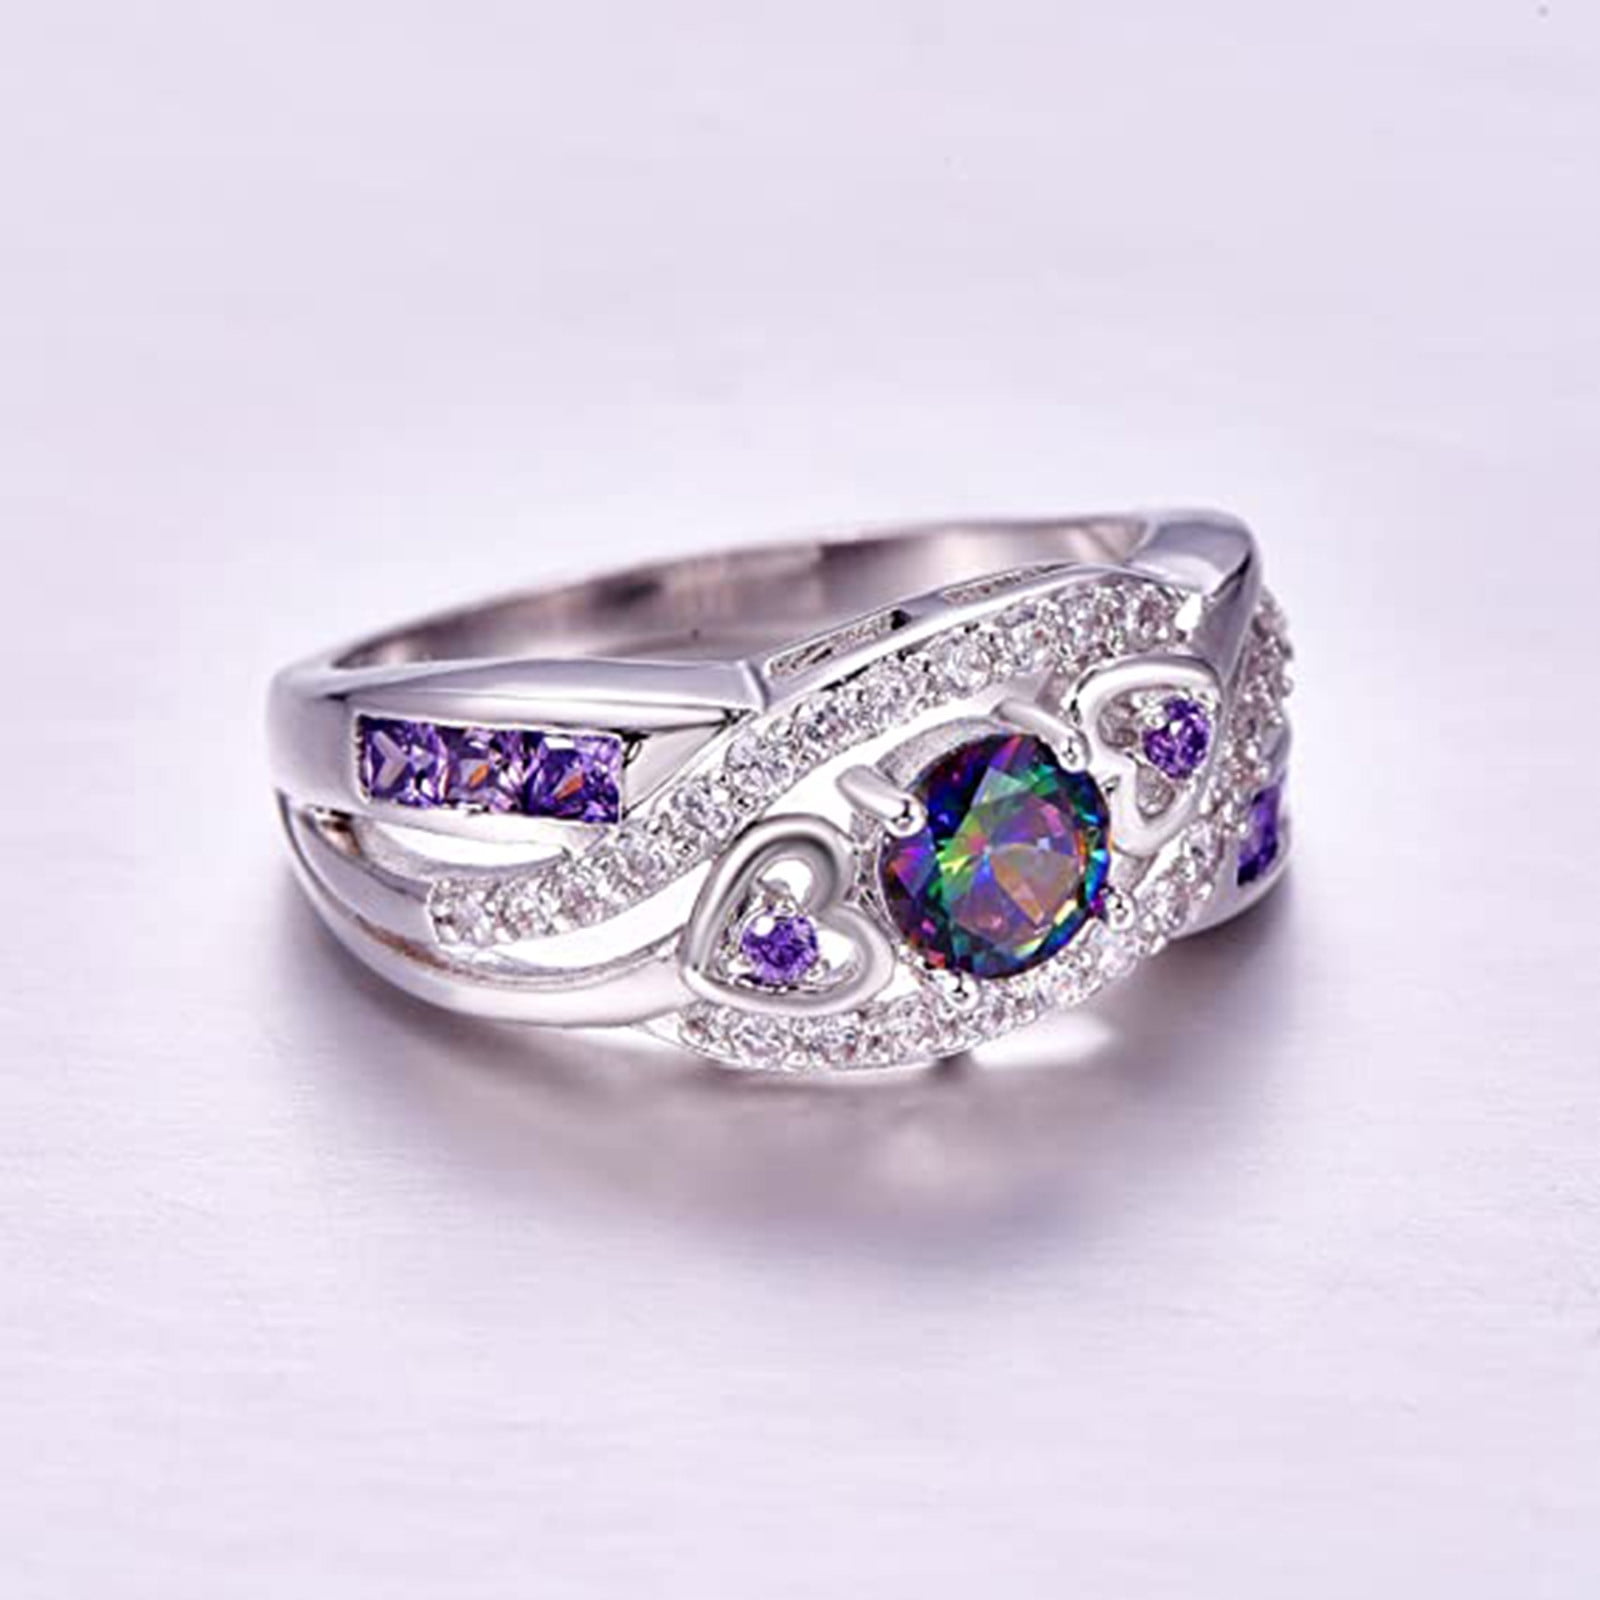 Women Fashion Jewelry 925 SIlver green Amethyst Ring Wedding Size 6-10 